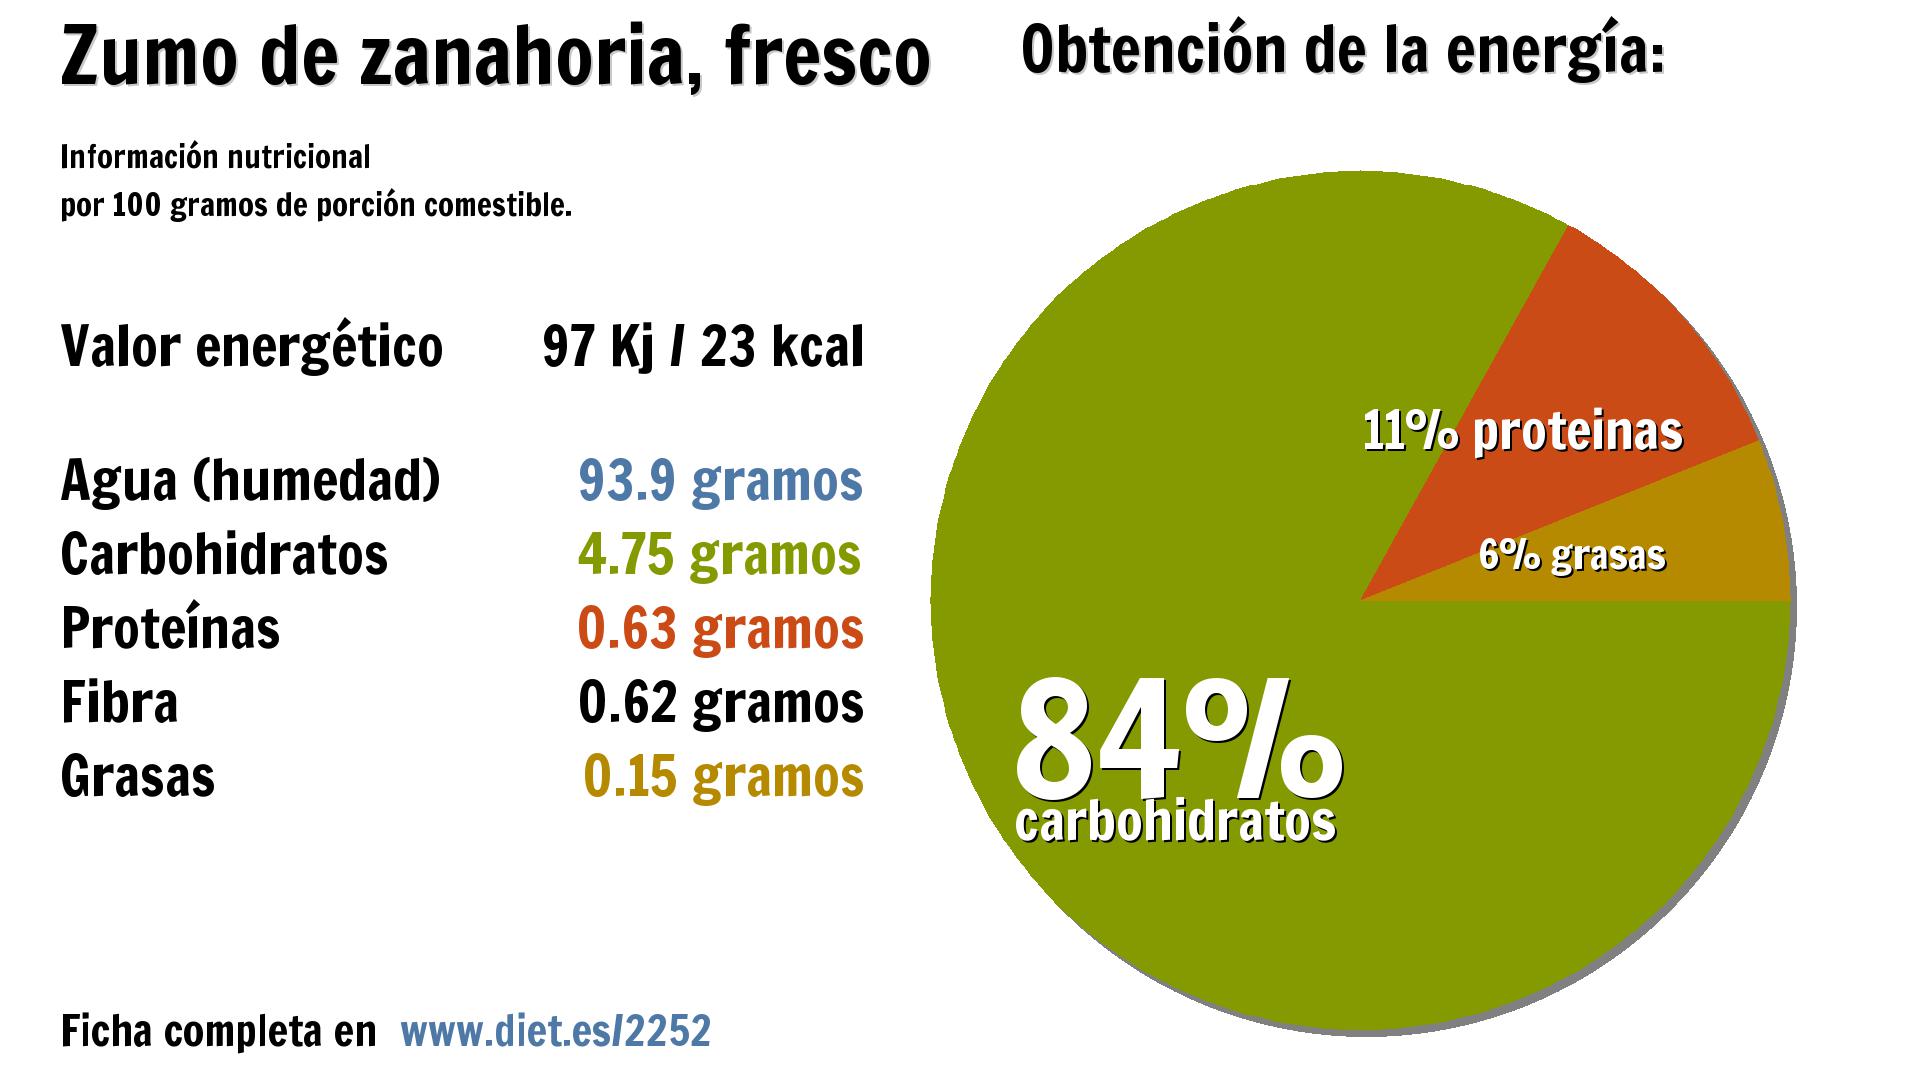 Zumo de zanahoria, fresco: energía 97 Kj, agua 94 g., carbohidratos 5 g., proteínas 1 g. y fibra 1 g.